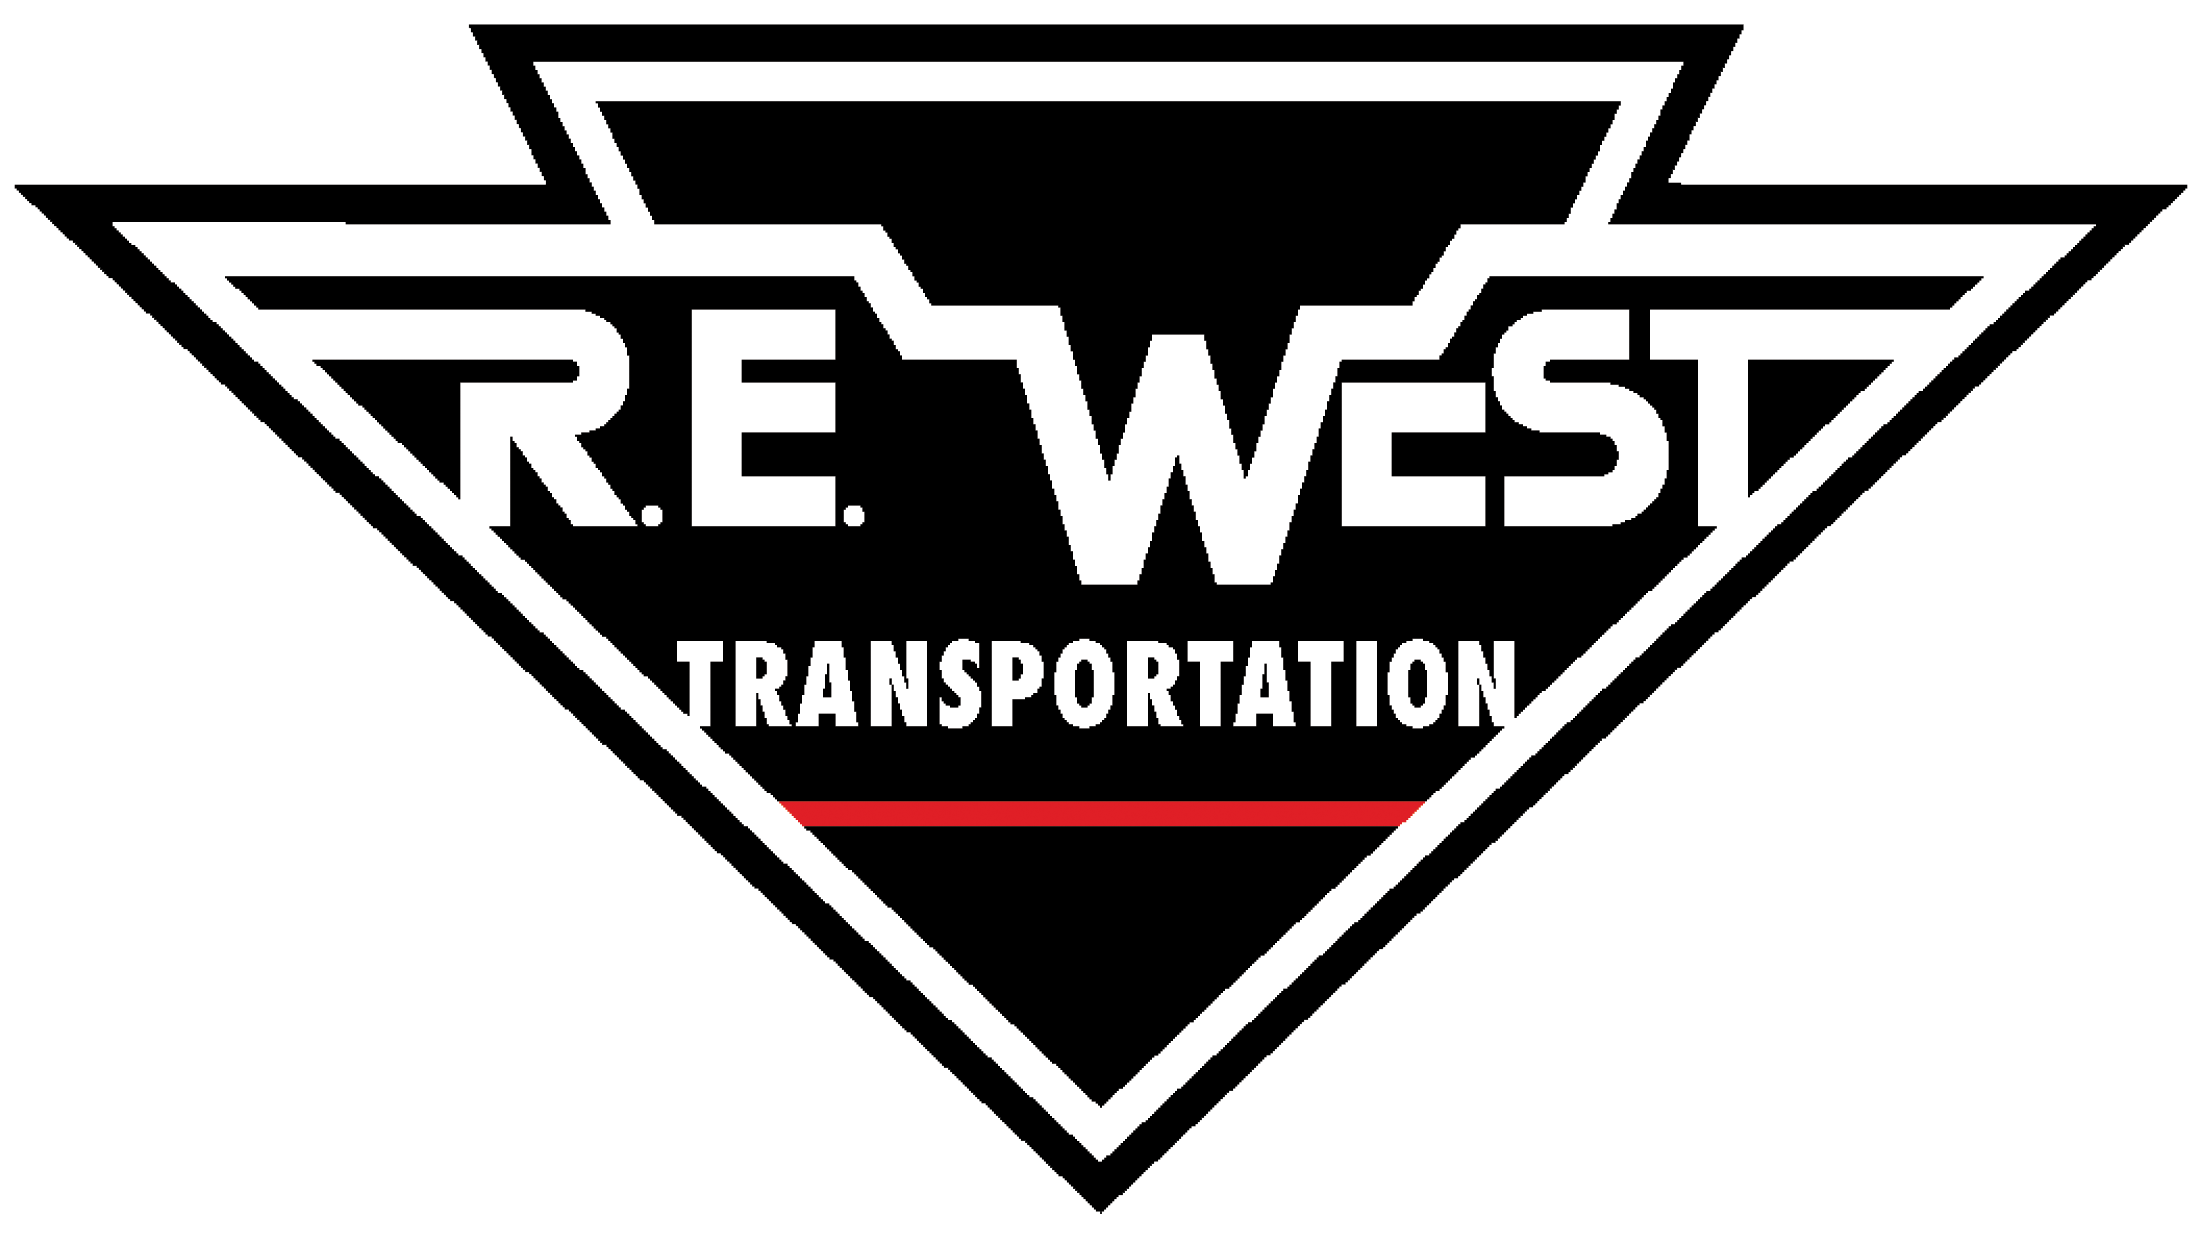 R. E. West Transportation